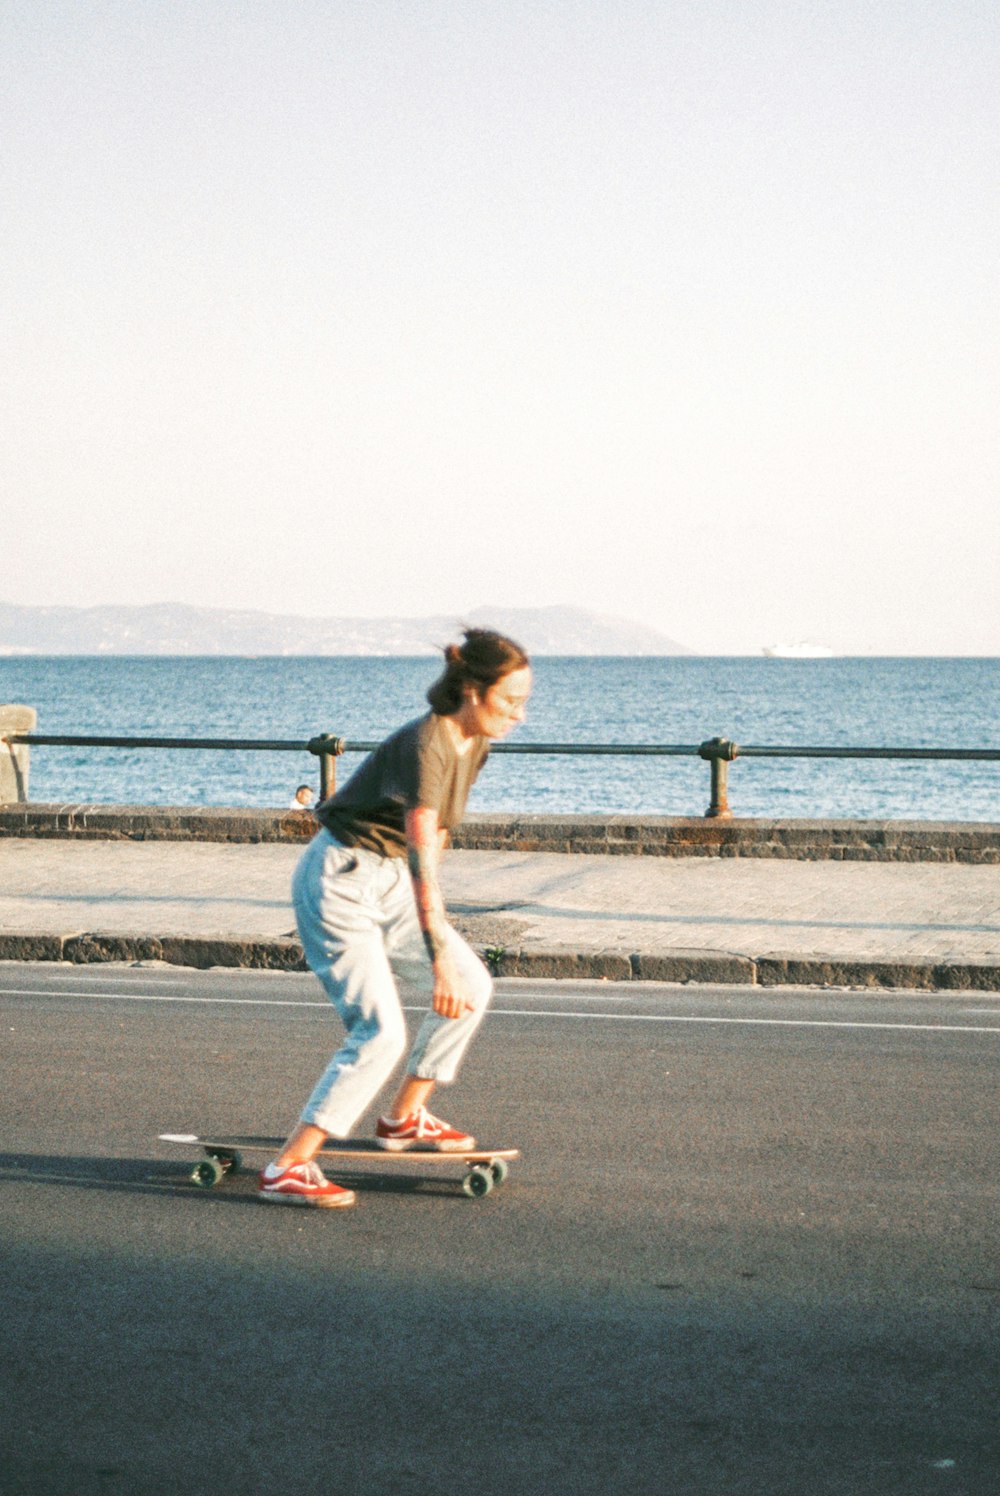 a woman riding a skateboard down a street next to the ocean